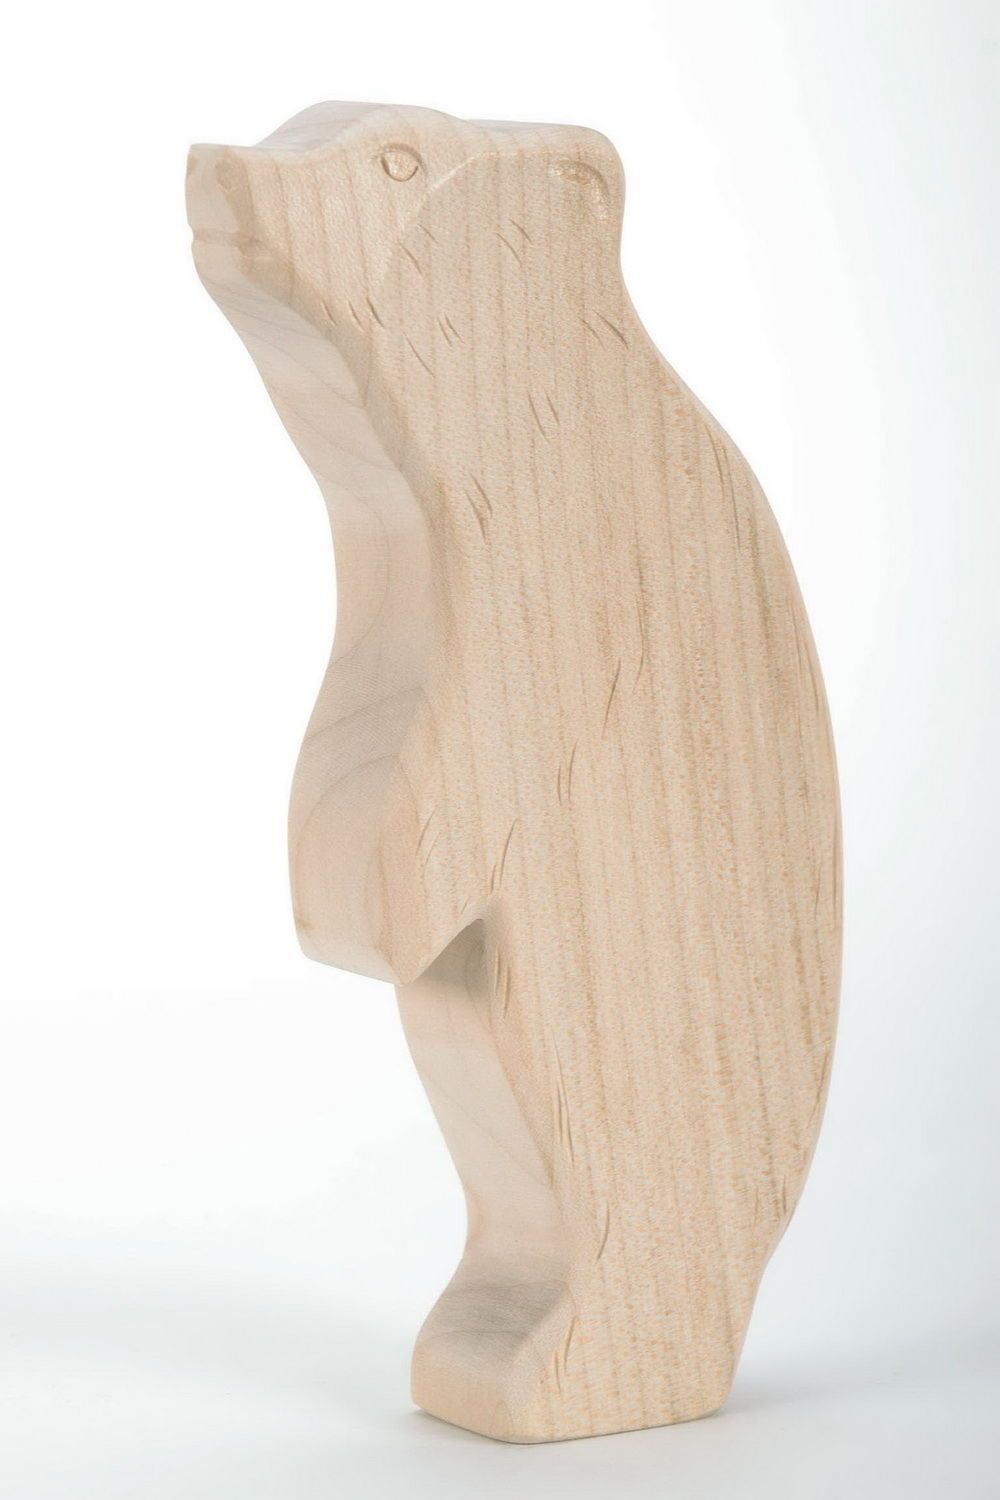 Figurine de bois faite main Grizzli photo 3